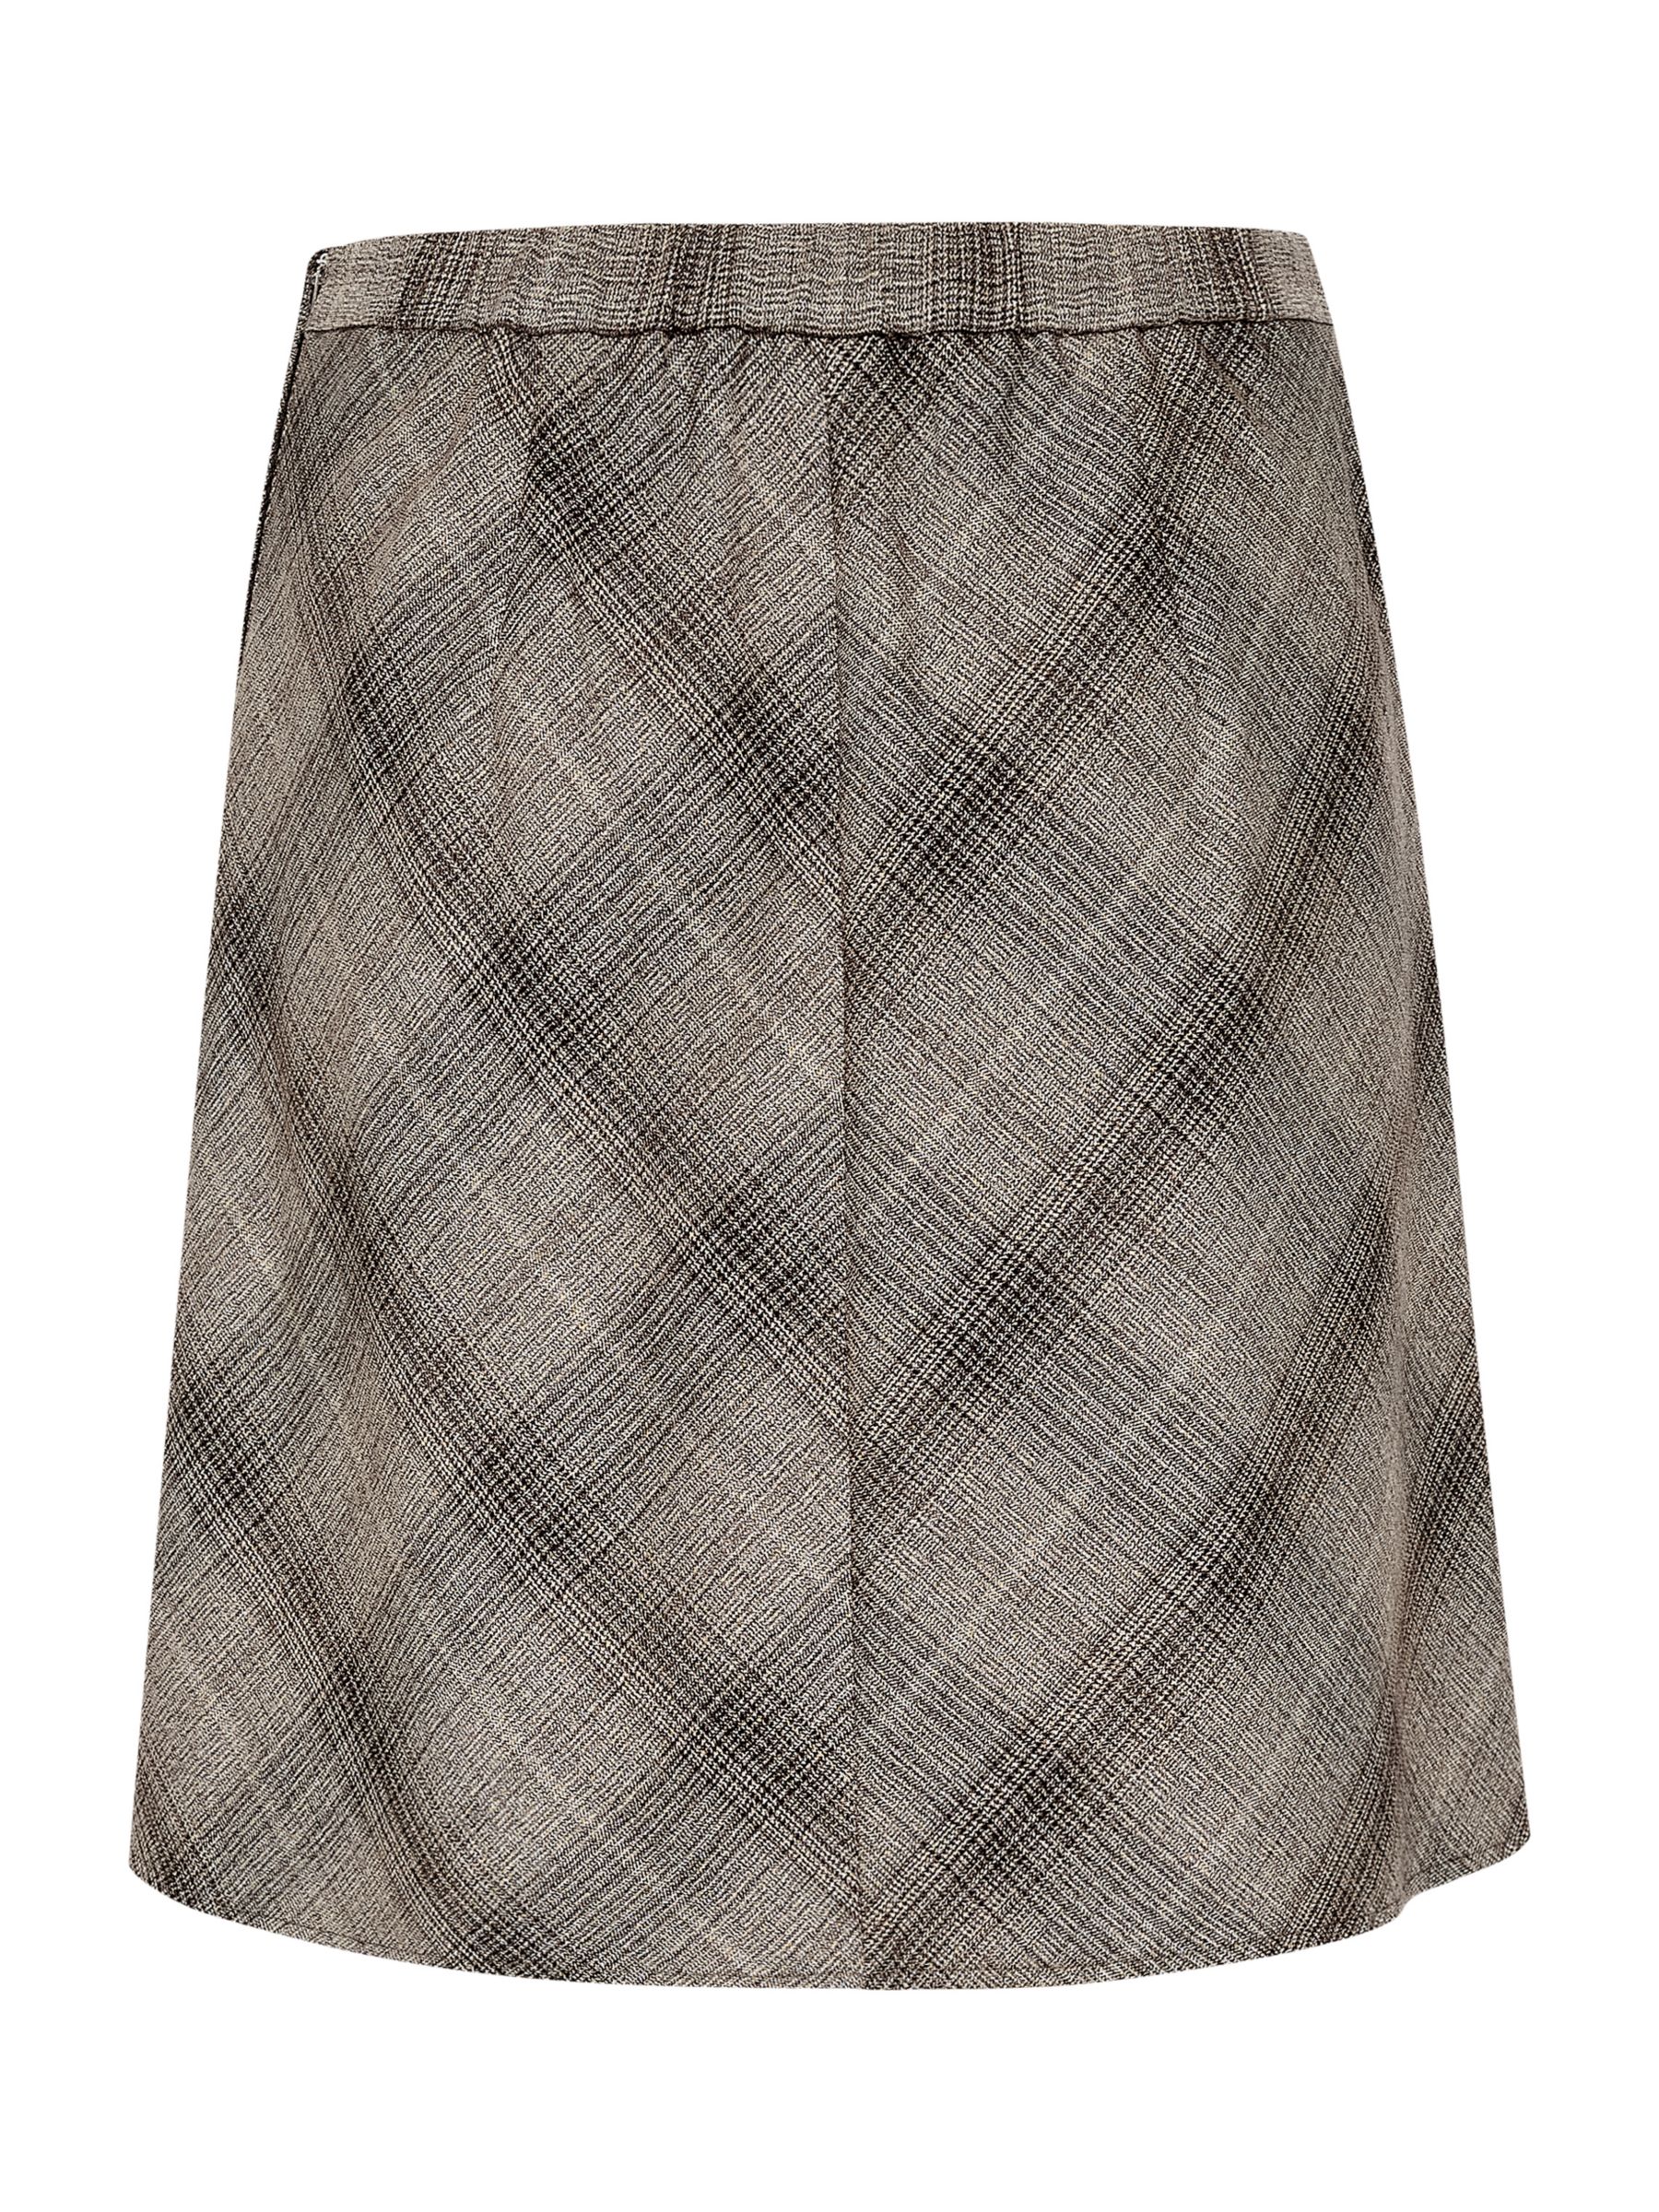 Buy Soaked In Luxury Storie Ecovero Blend Yara Skirt, Hot Fudge Checks Online at johnlewis.com